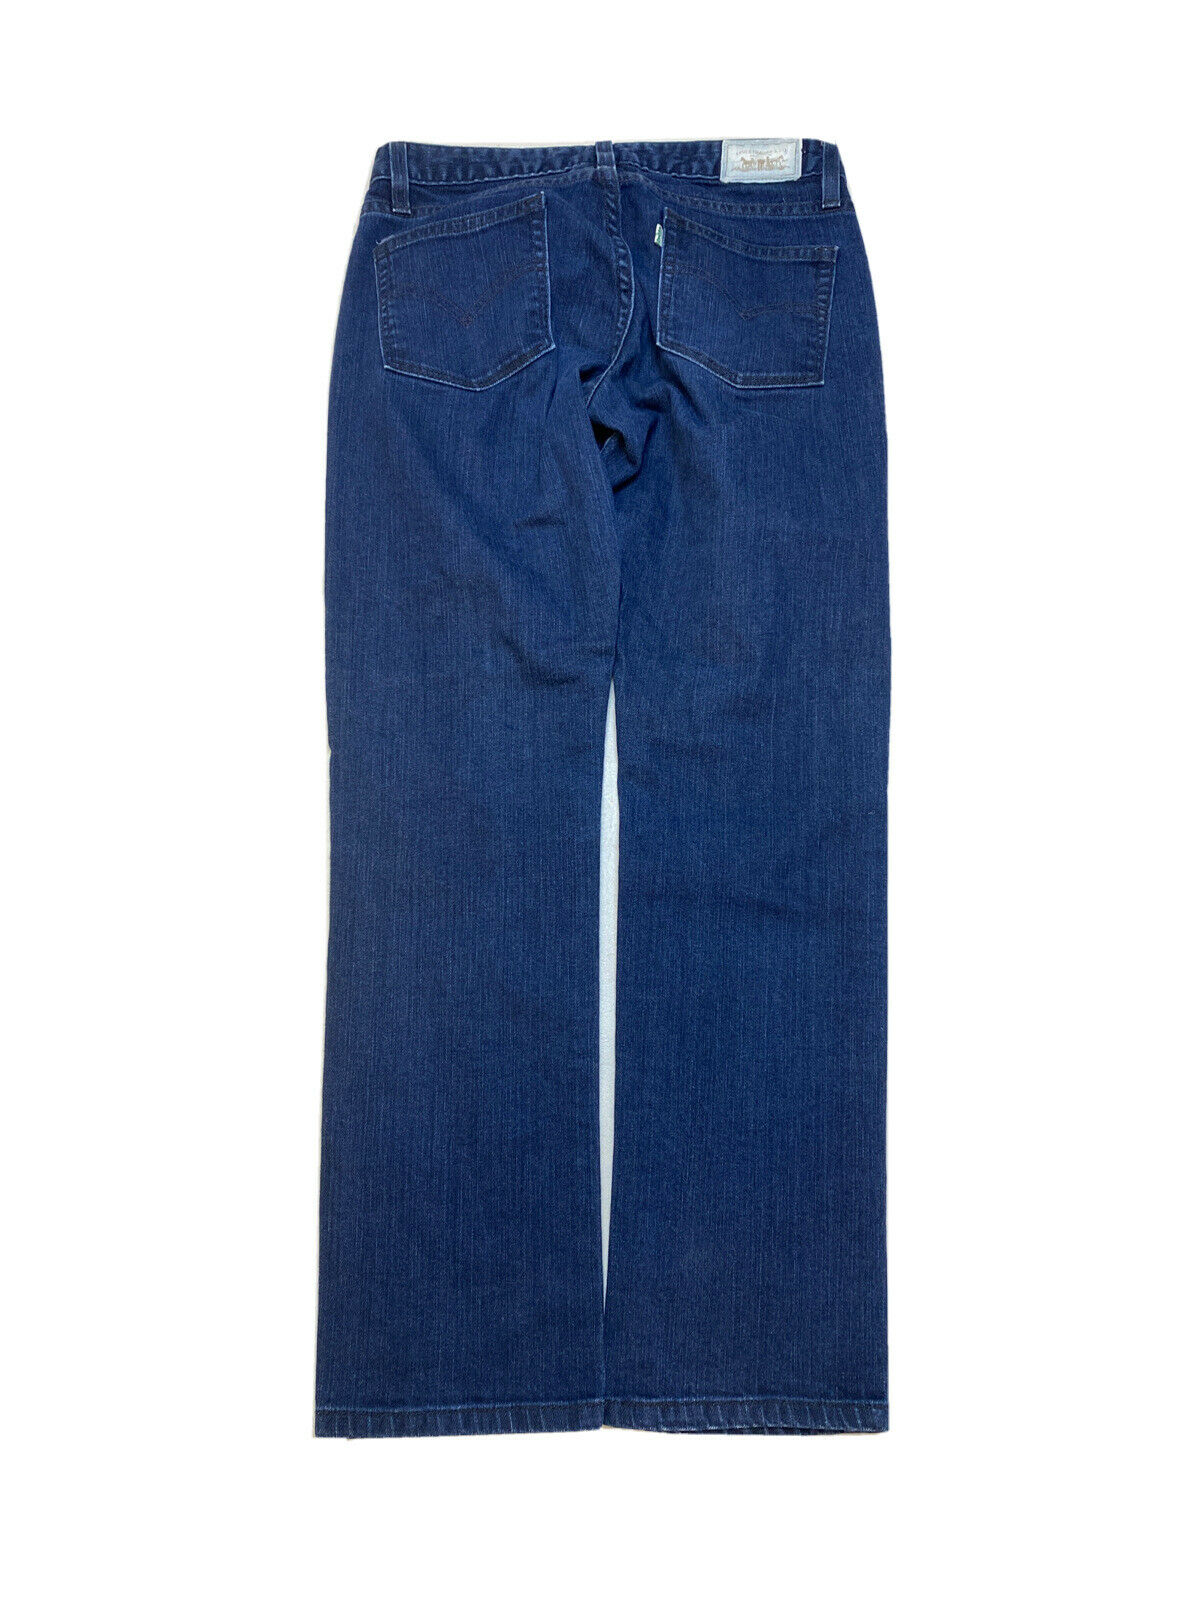 Levi's Dark Wash 531 Low Skinny Blue Denim Jeans para mujer Sz 4 Short